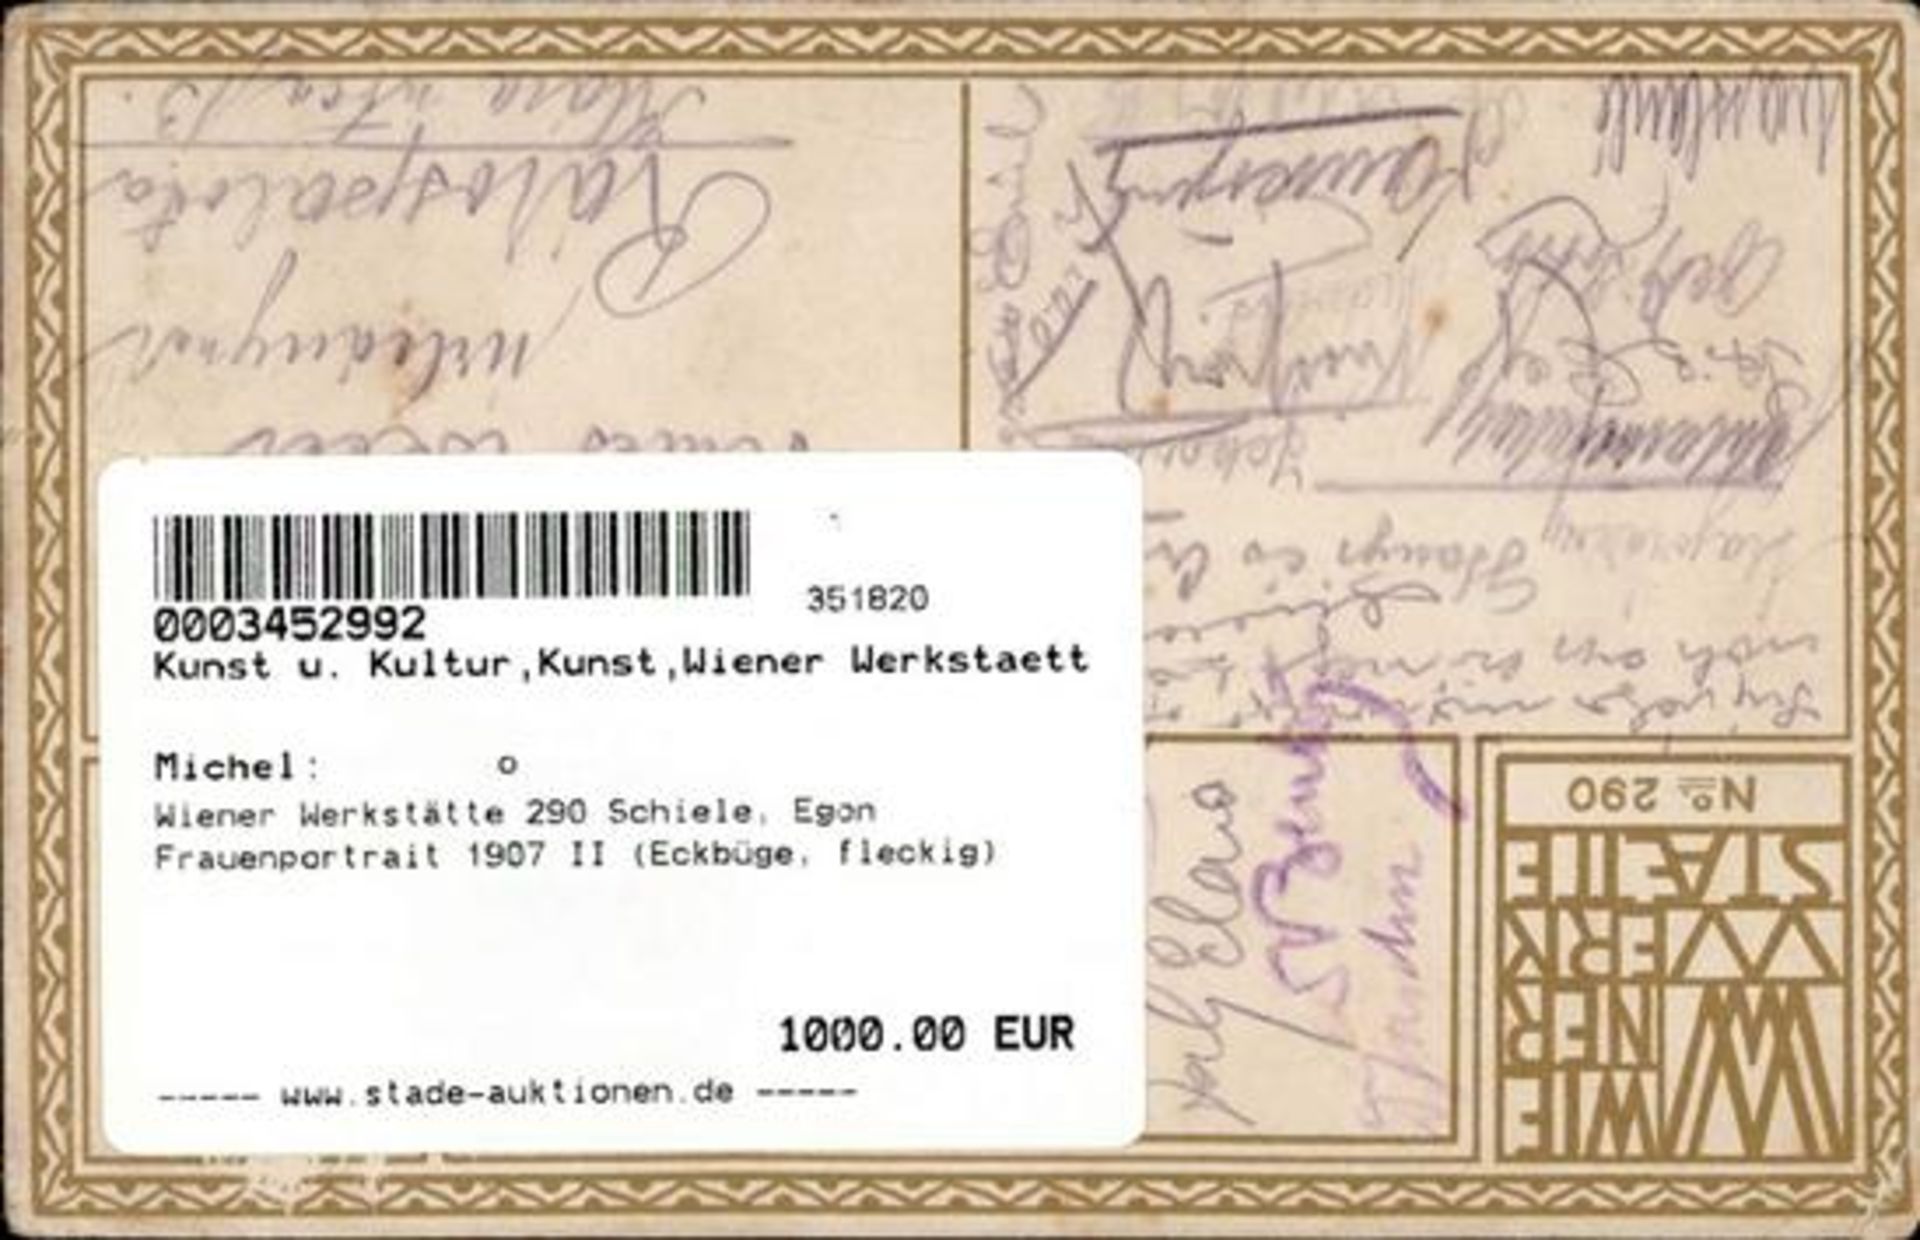 Wiener Werkstätte 290 Schiele, Egon Frauenportrait 1907 II (Eckbüge, fleckig) - Image 2 of 2